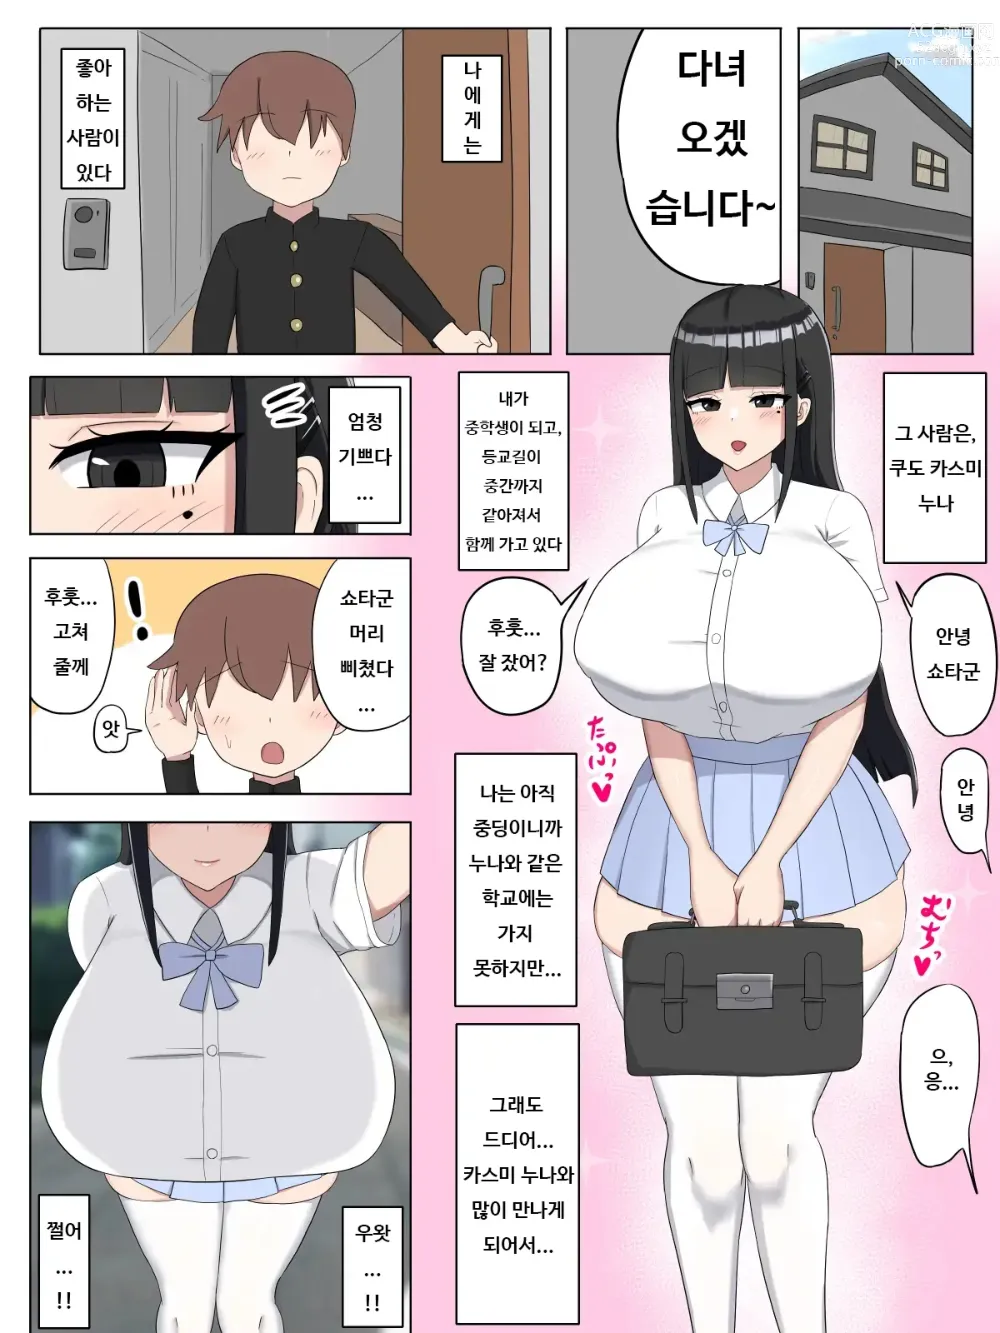 Page 3 of doujinshi 내가 좋아하는 누나는...